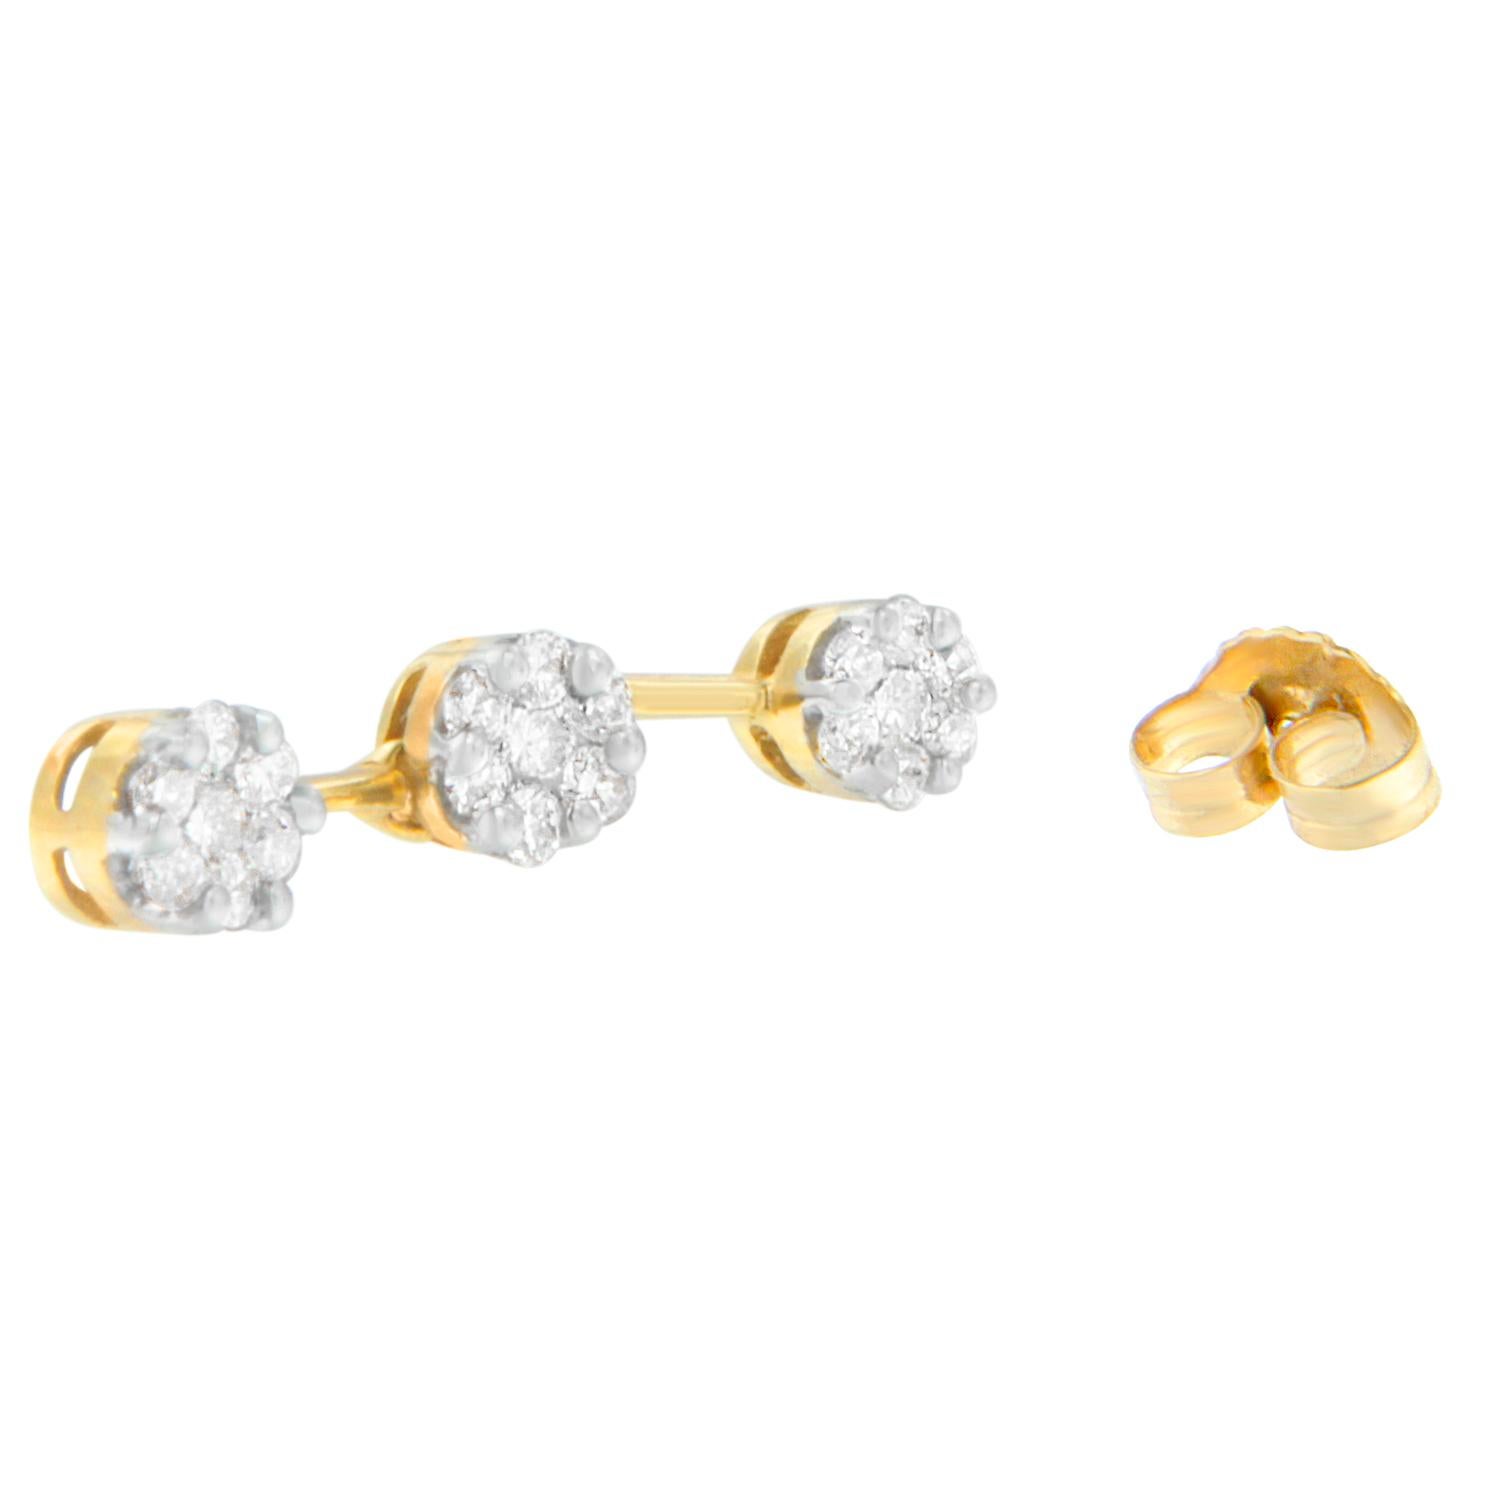 Contemporary 14K Yellow Gold 1.0 Carat Round Diamond Earring